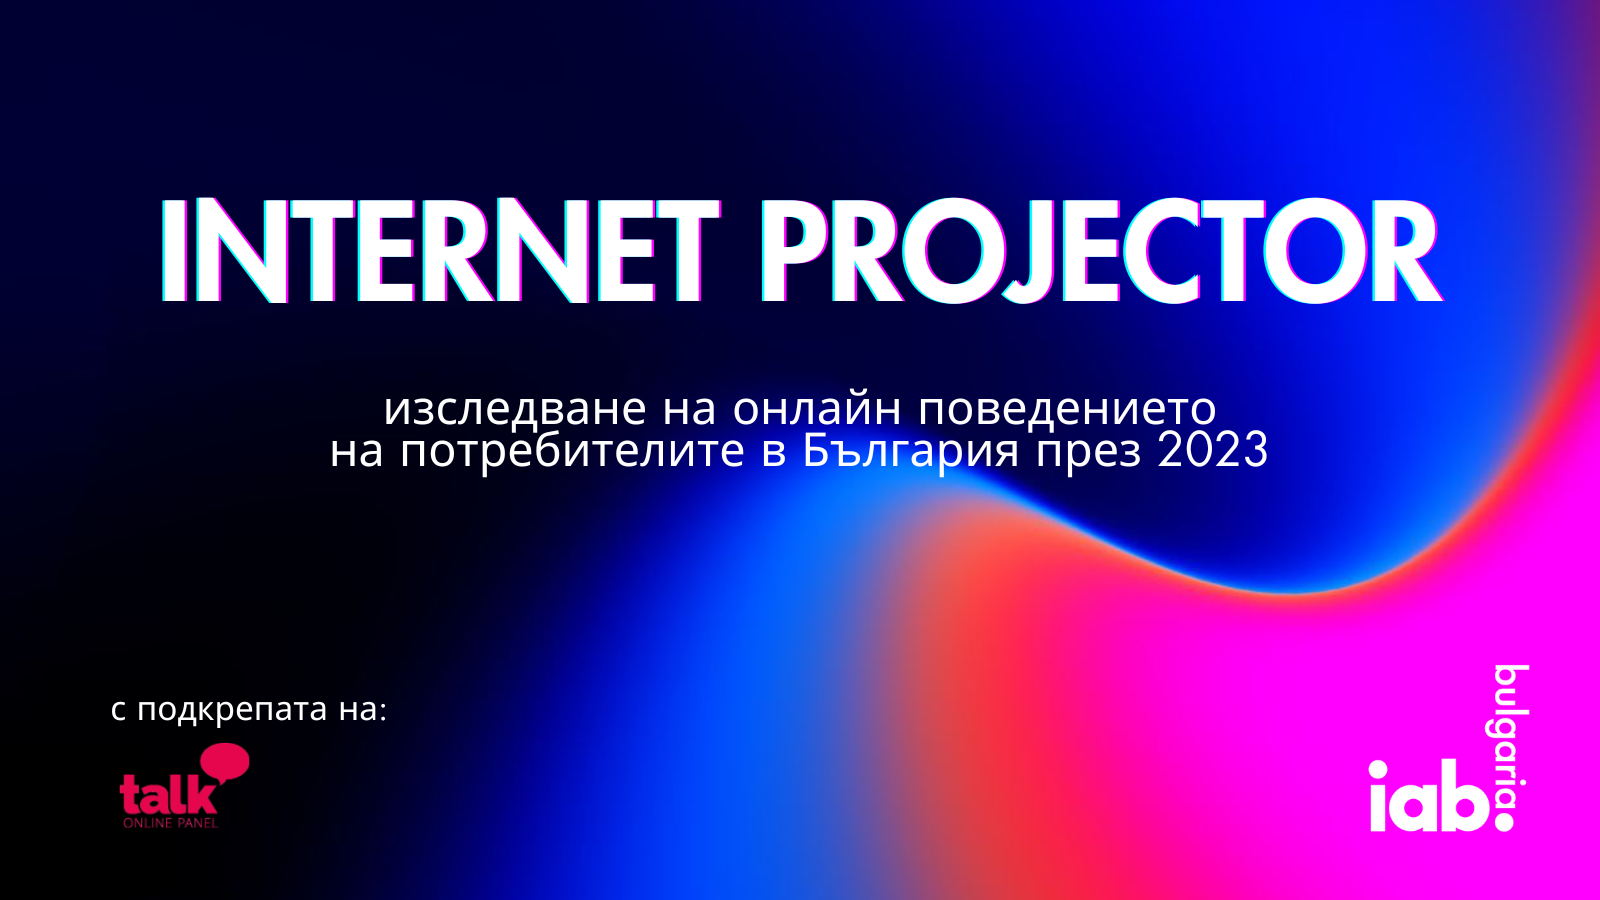 Internet Projector 2023